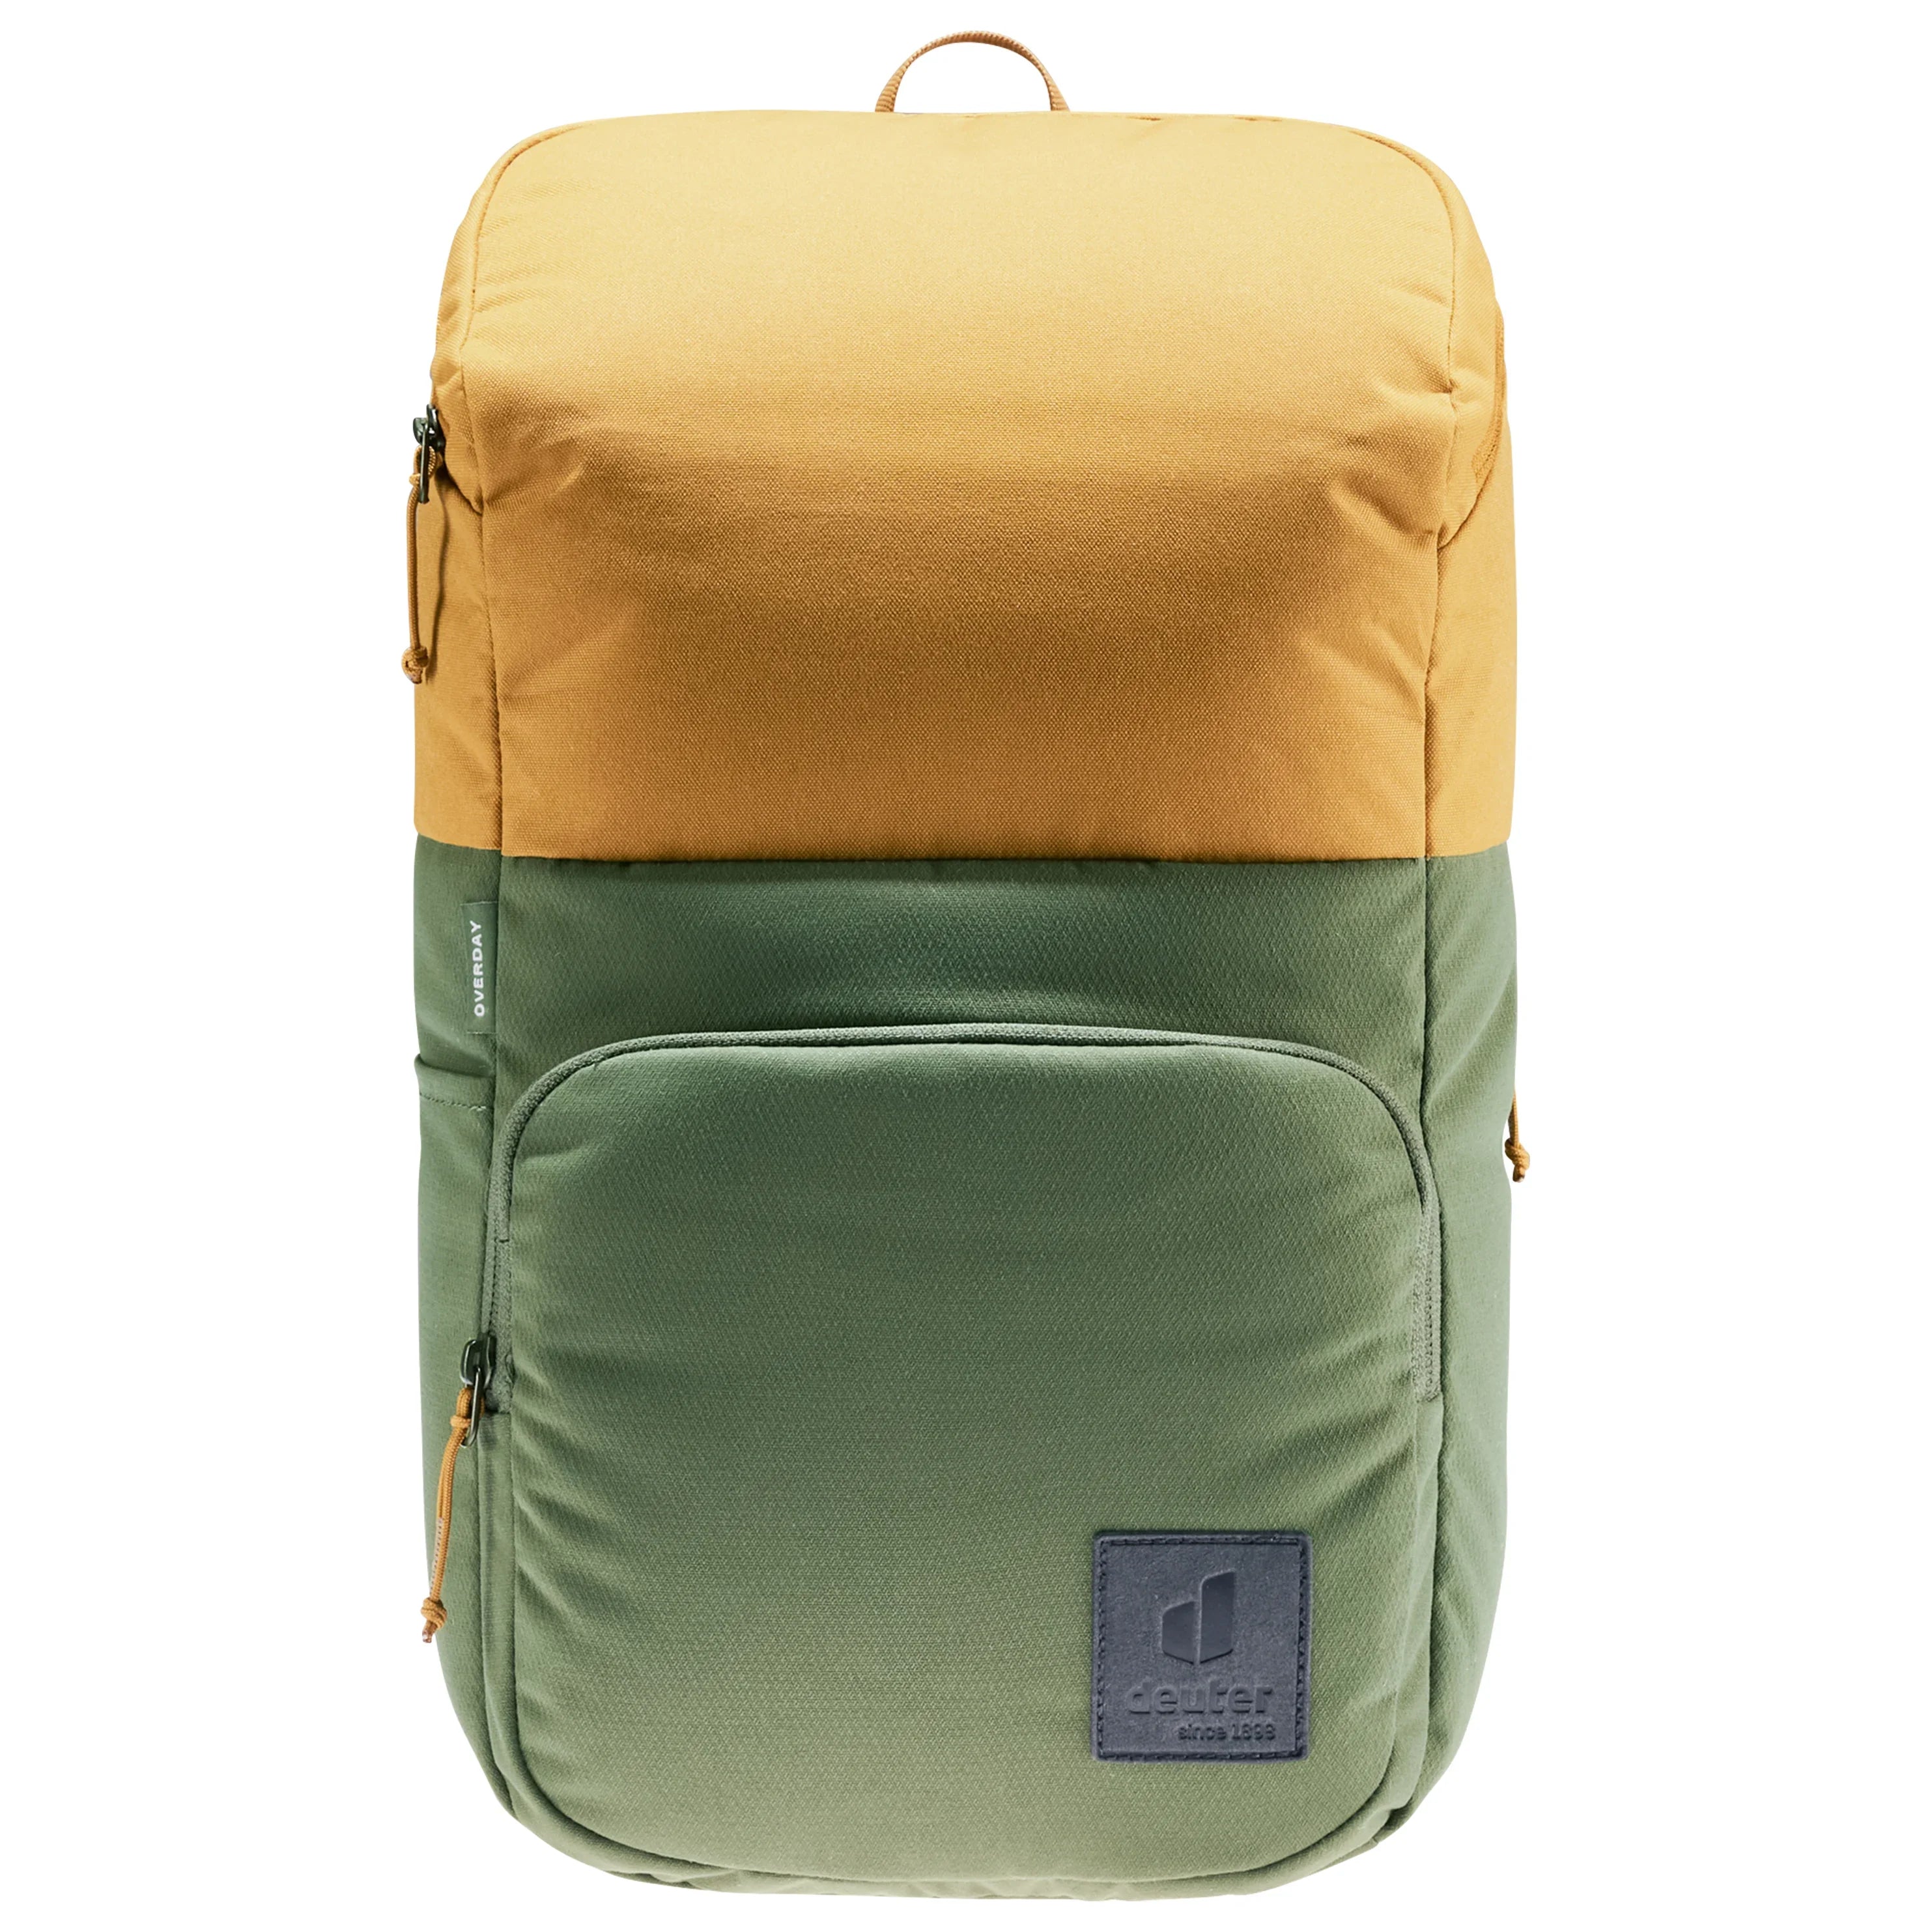 Deuter Daypack Overday sac à dos enfant 43 cm - Kaki-Cannelle